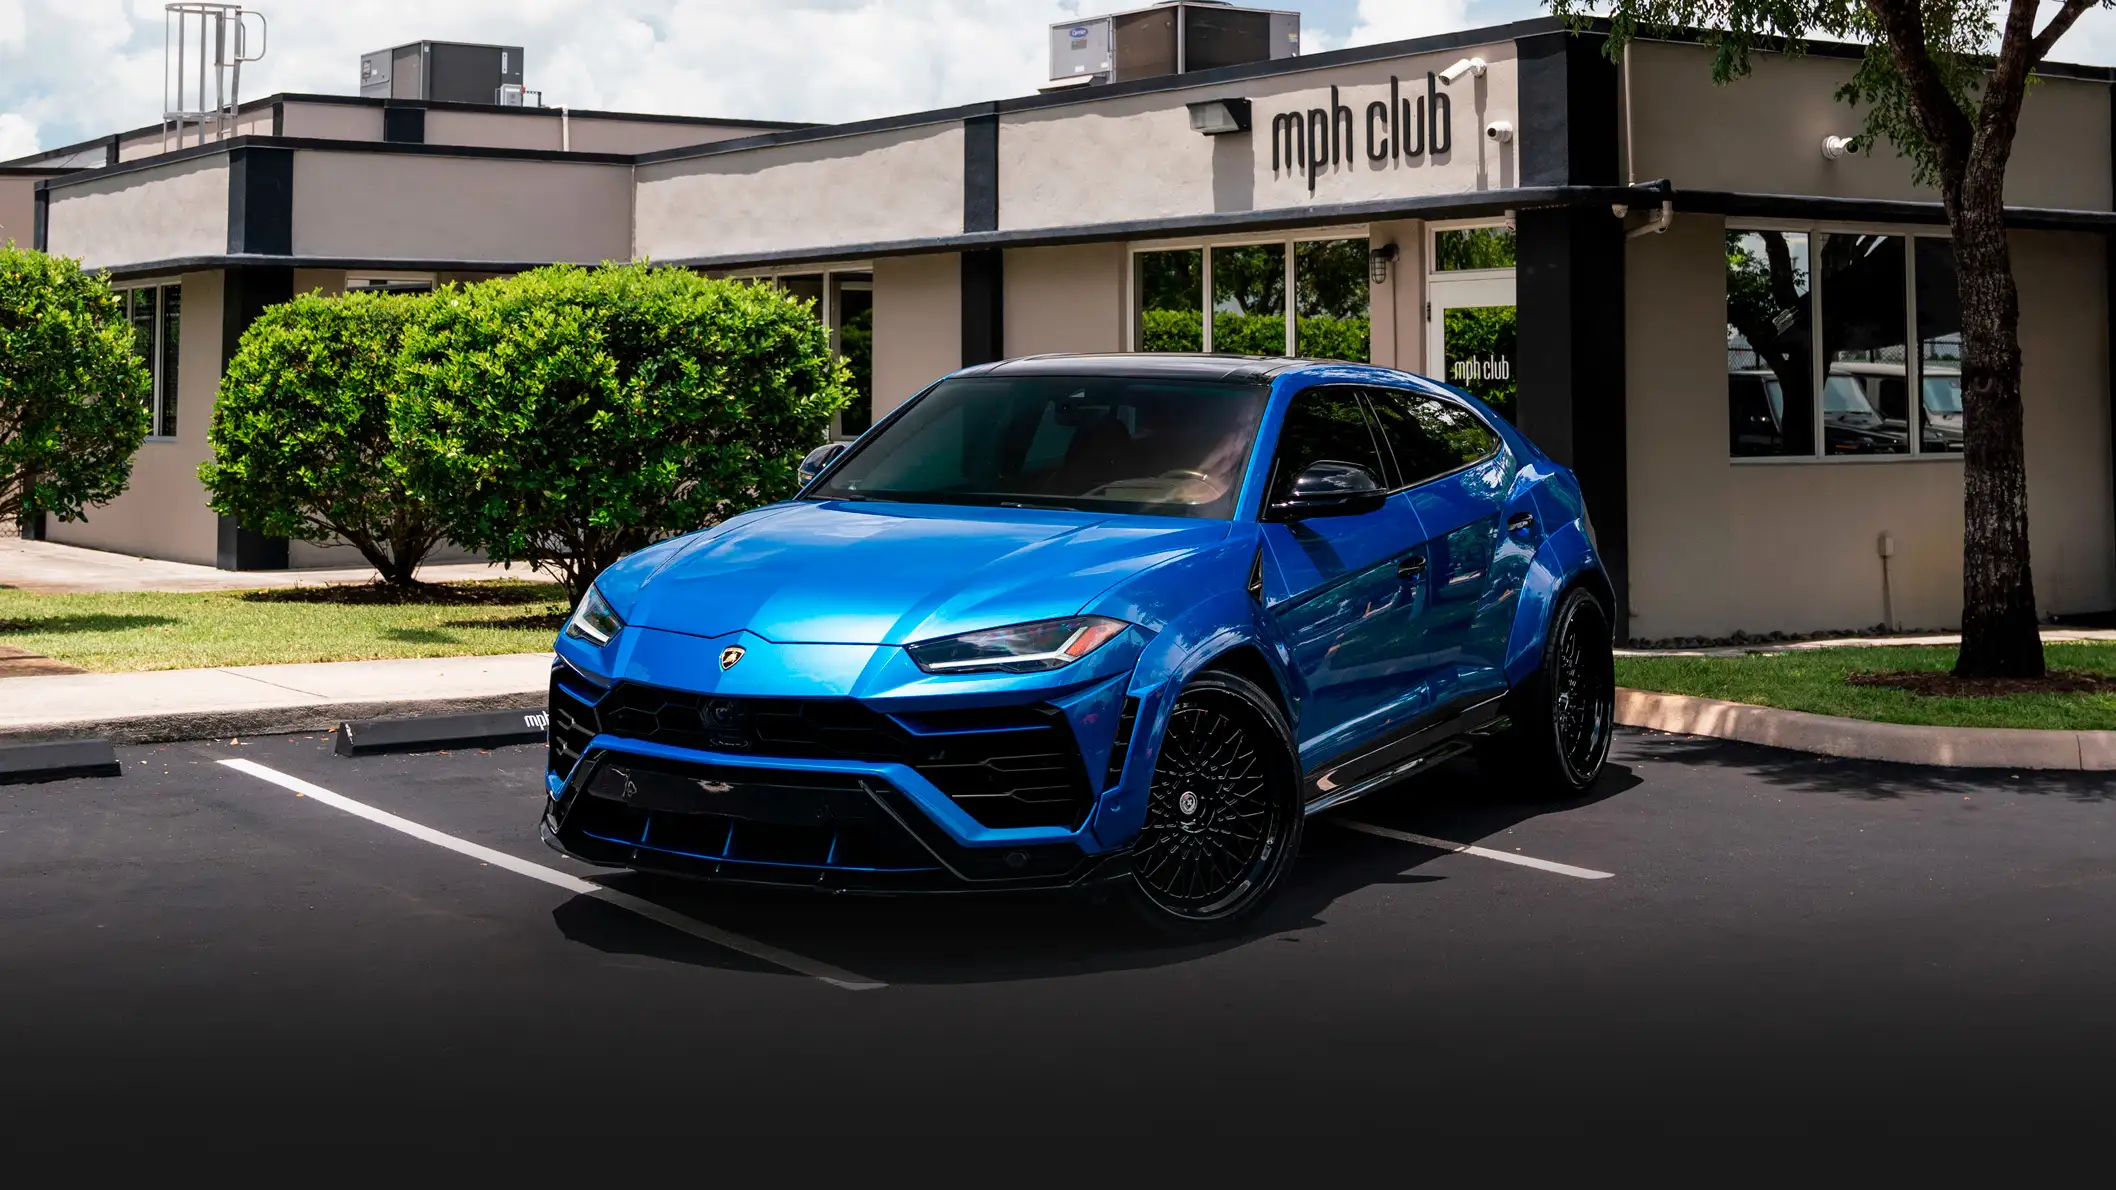 Lite blue Lamborghini Urus rental profile view mph club